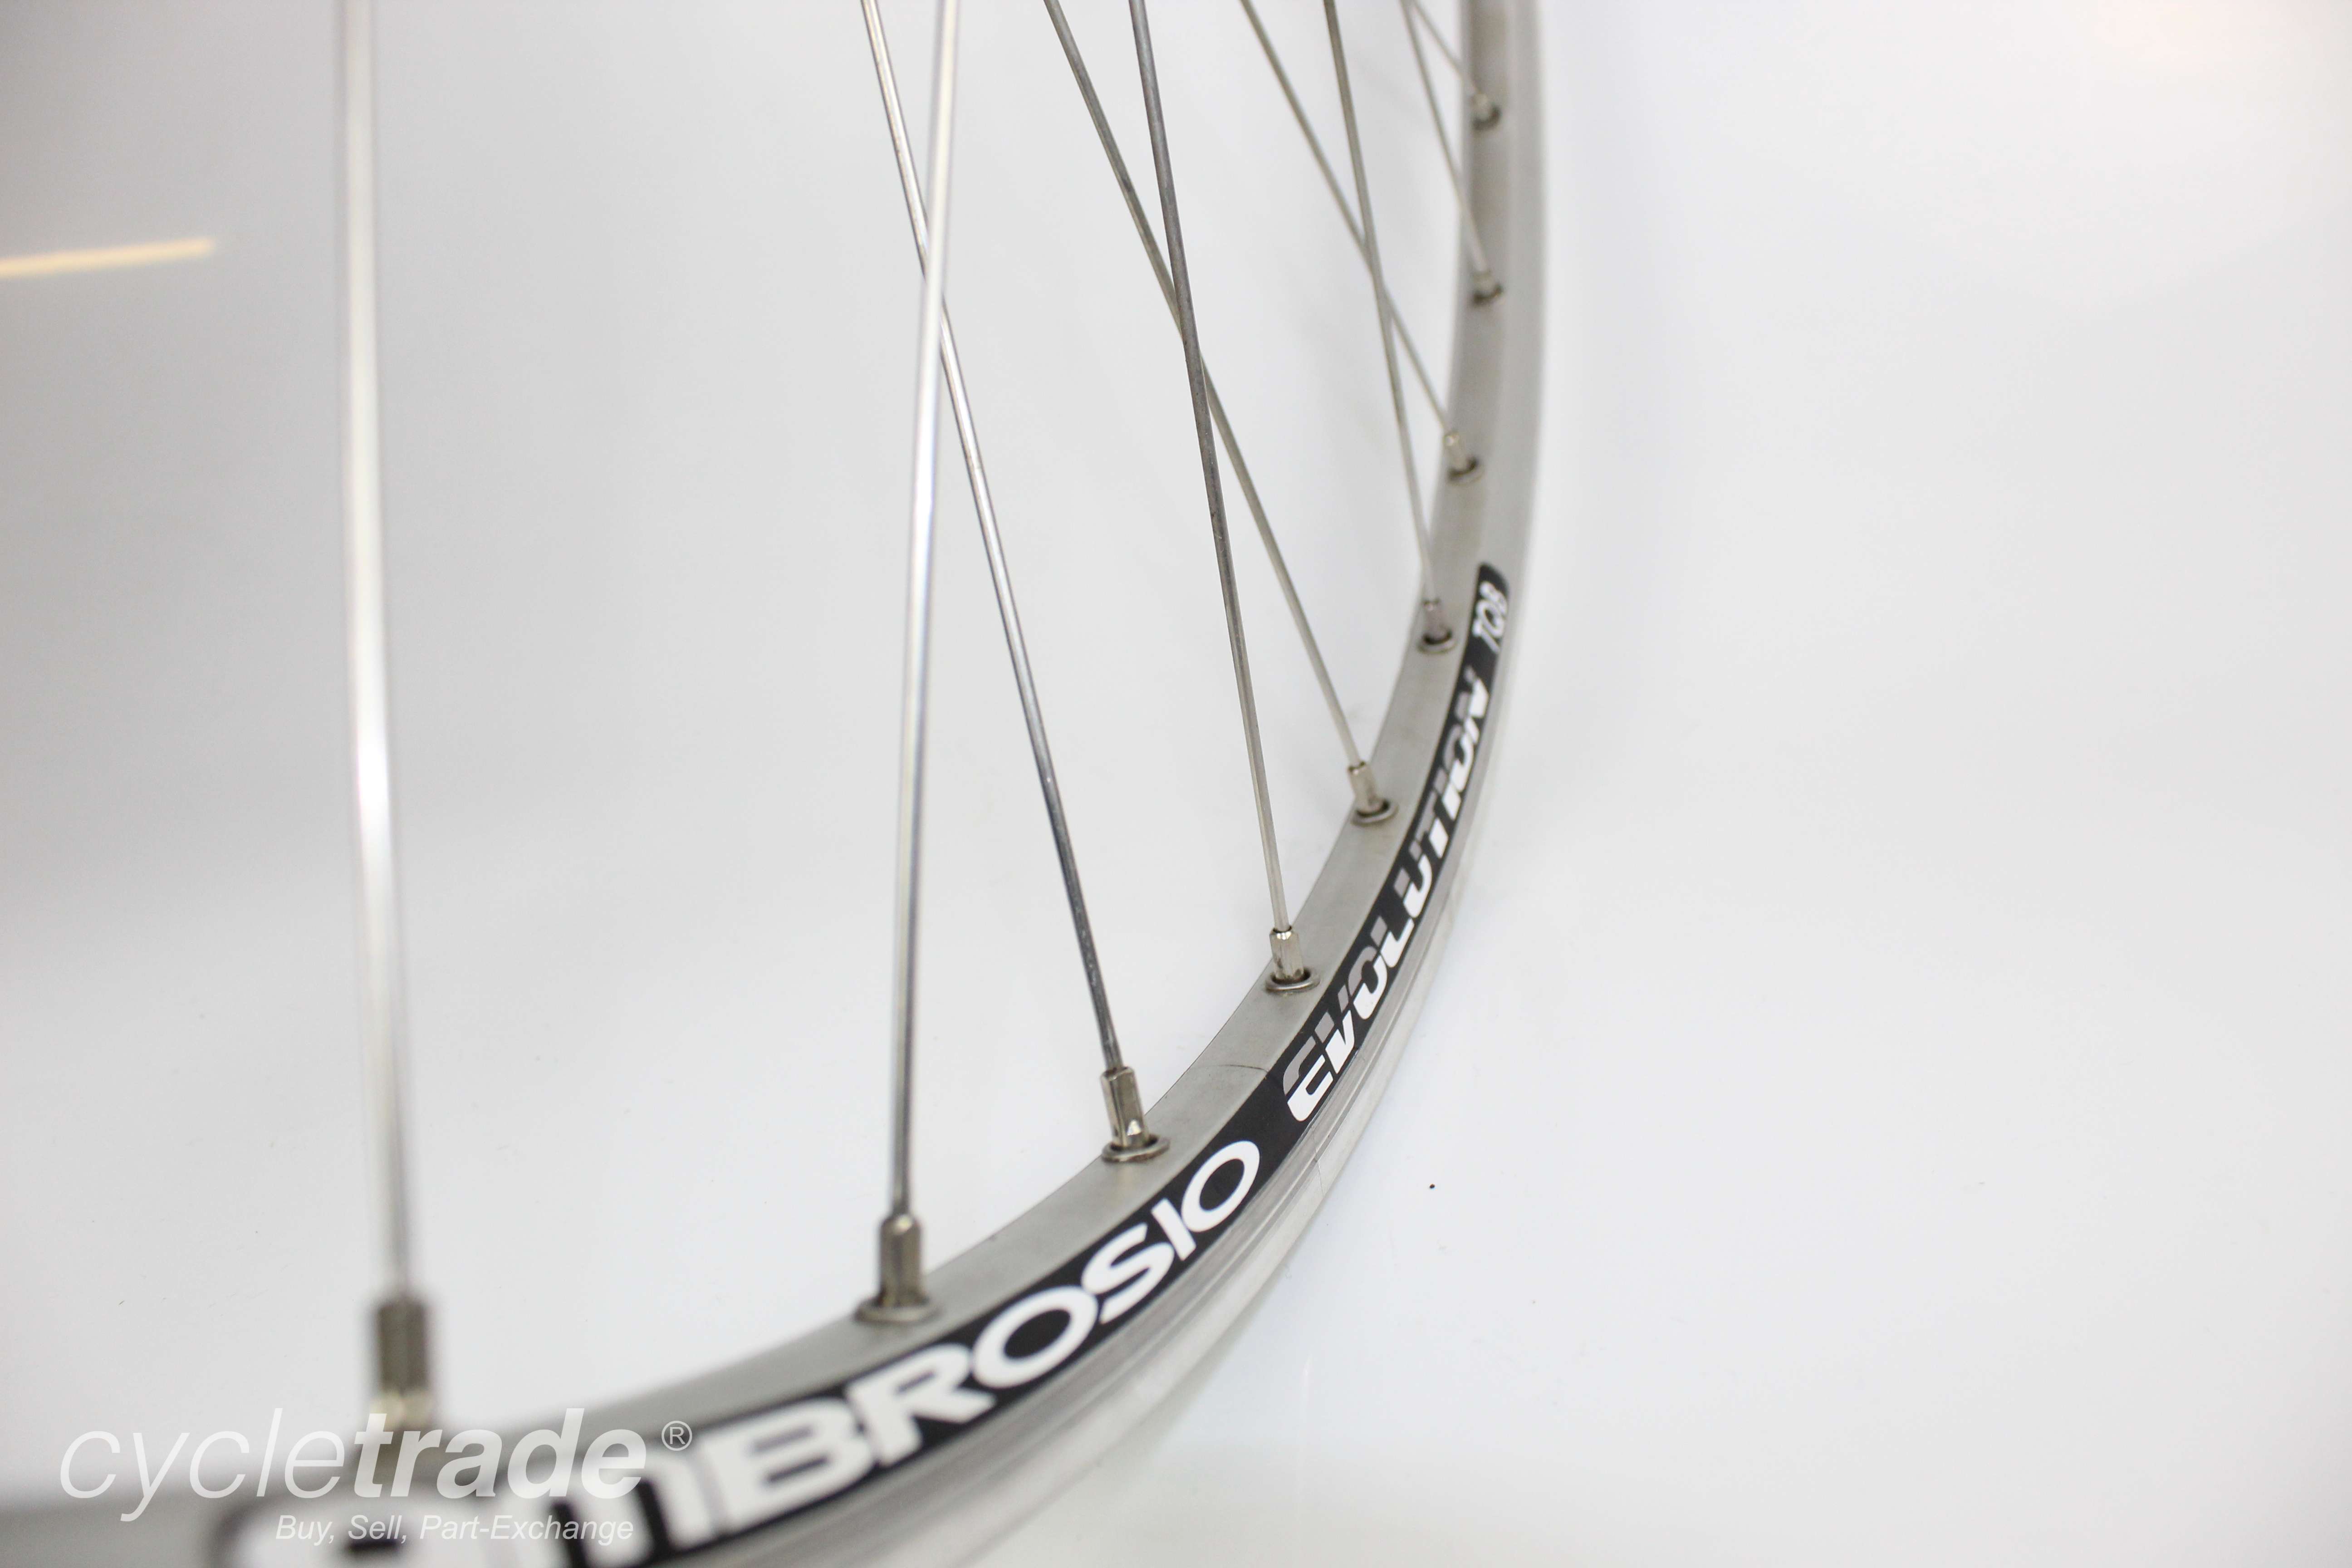 Rear Wheel - Shimano/Ambrosio Evolution/ 600 Tricolor- Grade B+